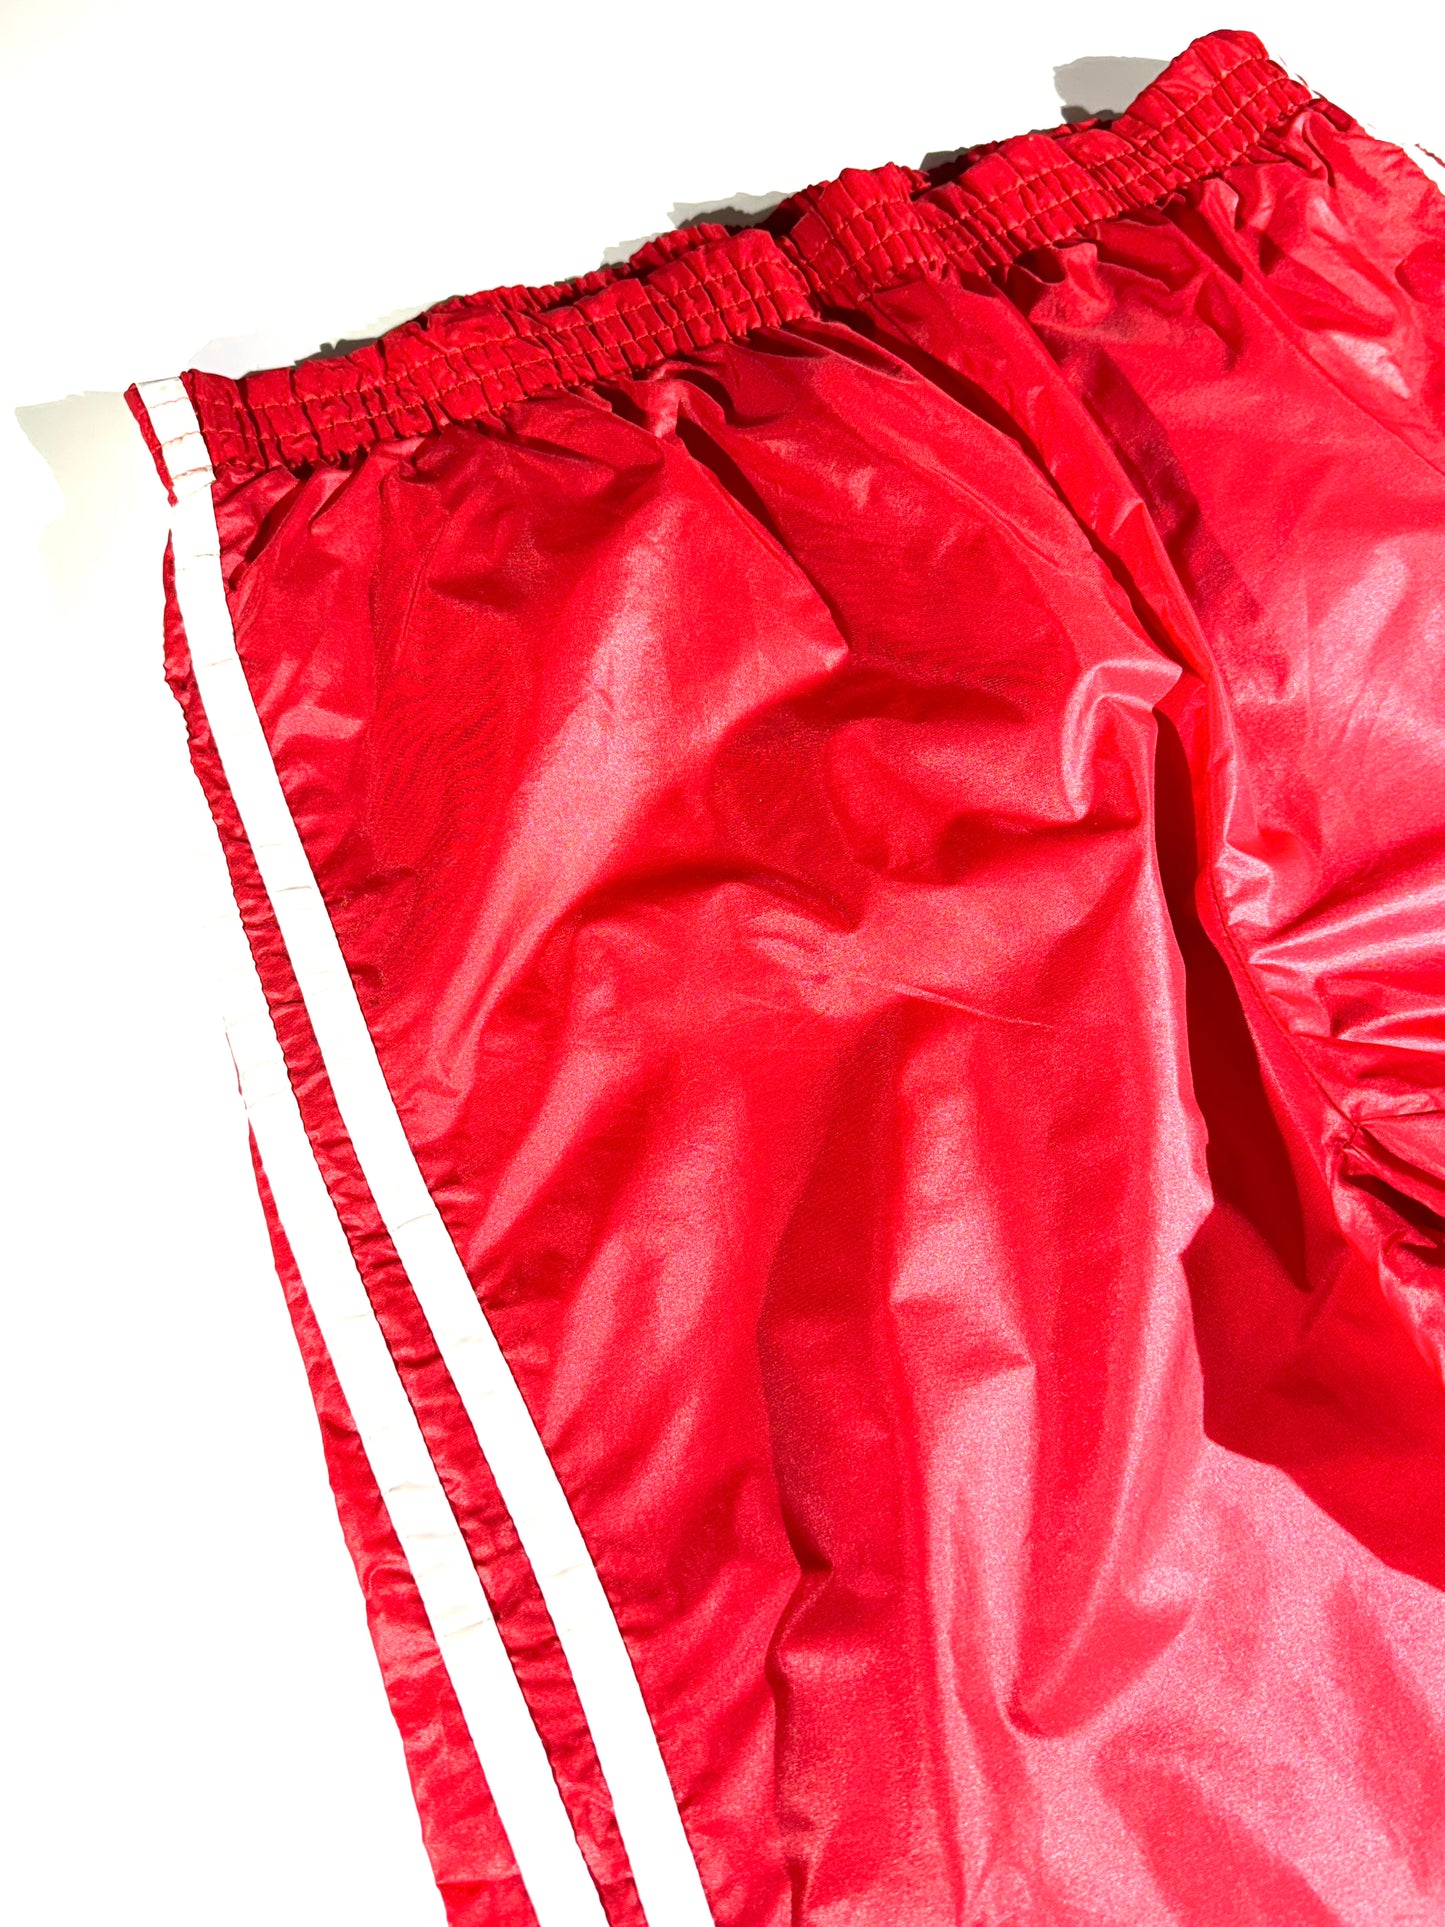 Vintage Red Track Pants Very Cool